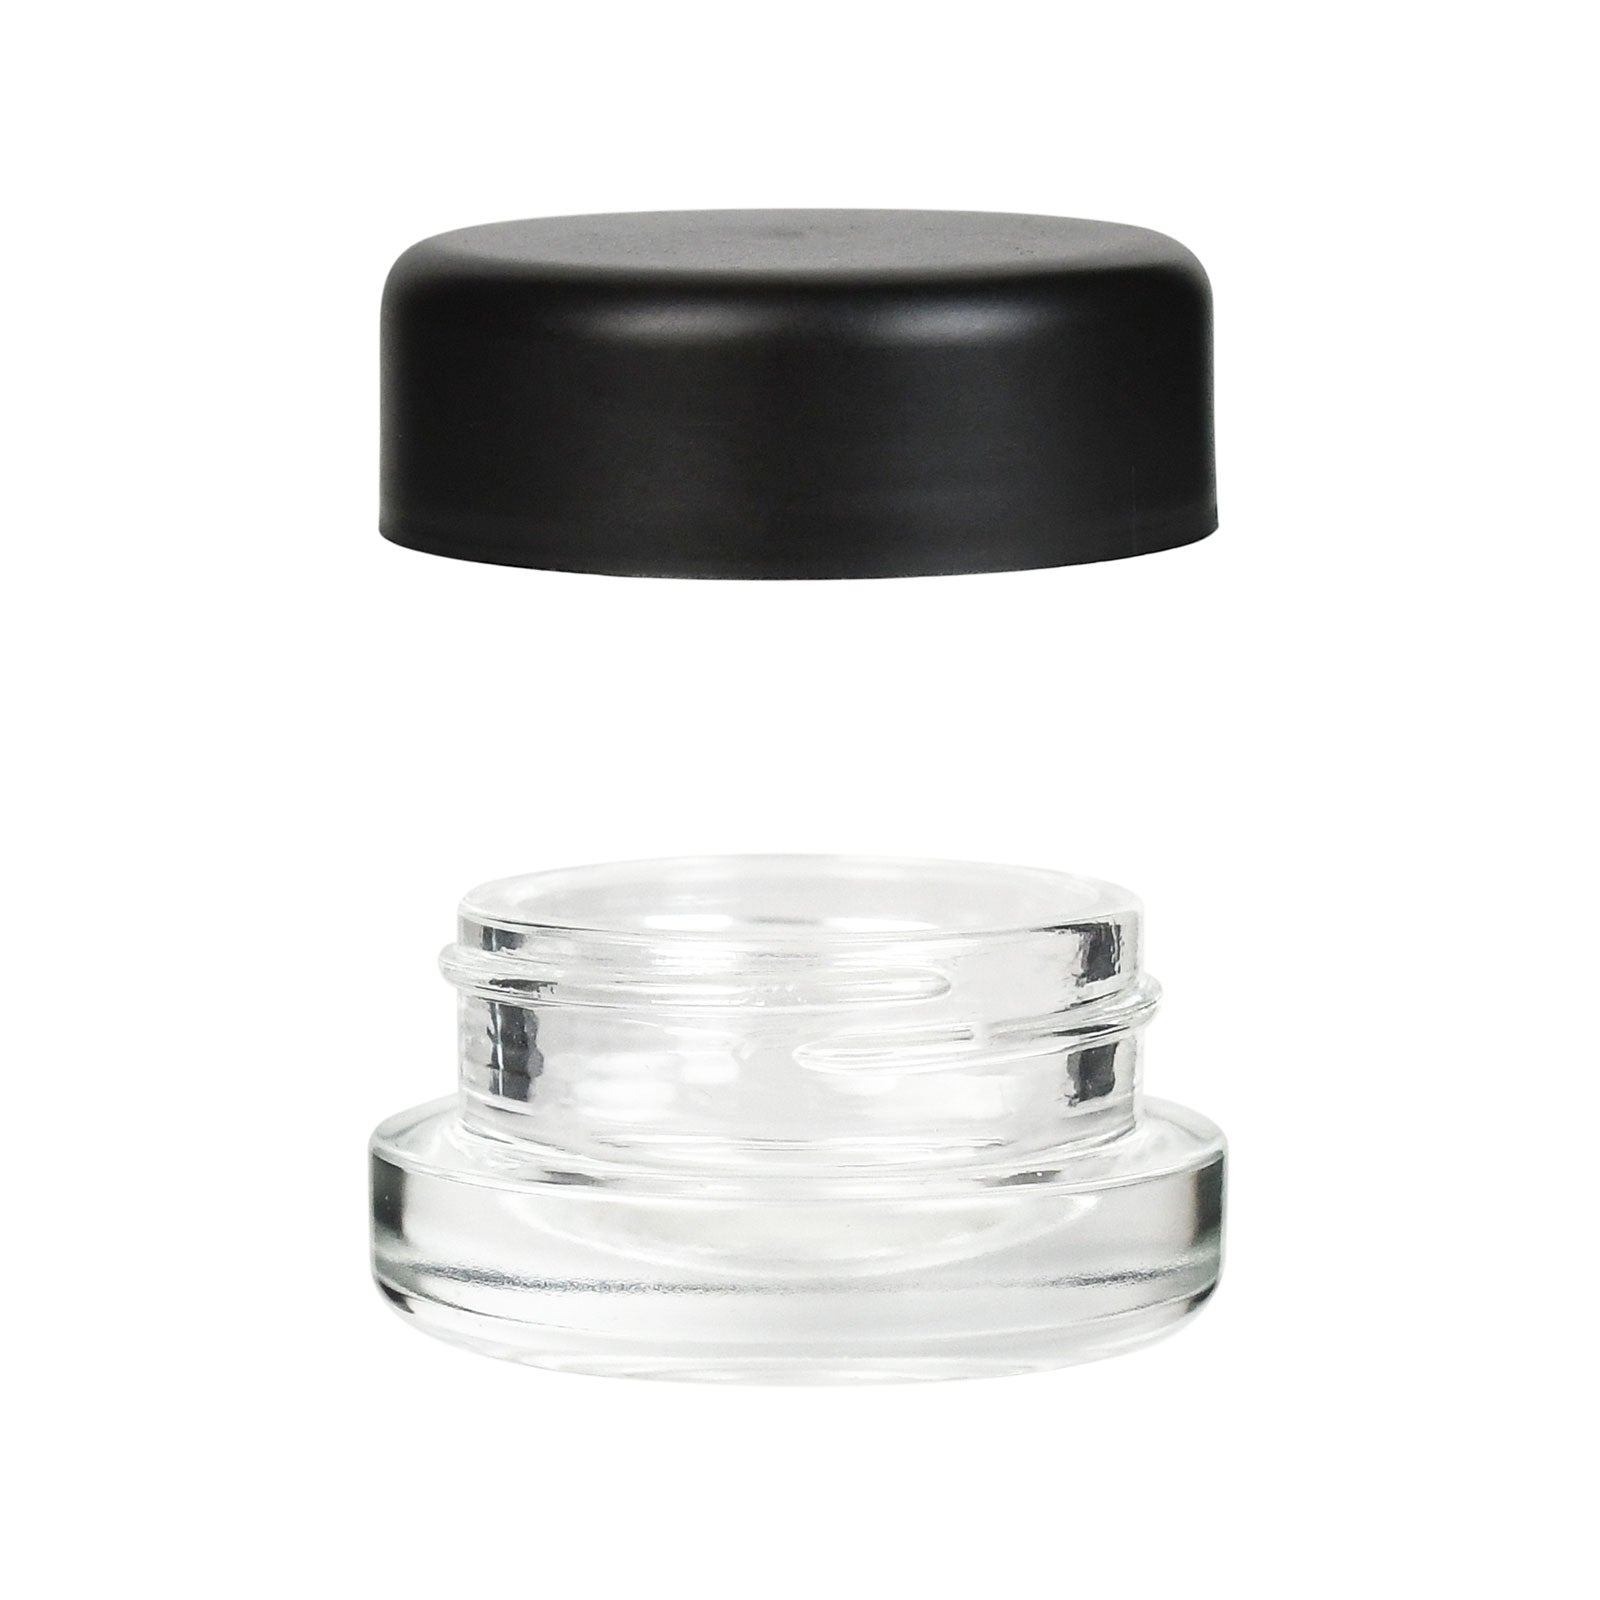 7ml Child Resistant Glass Jar With Black Cap - 1 Gram - 40 Count